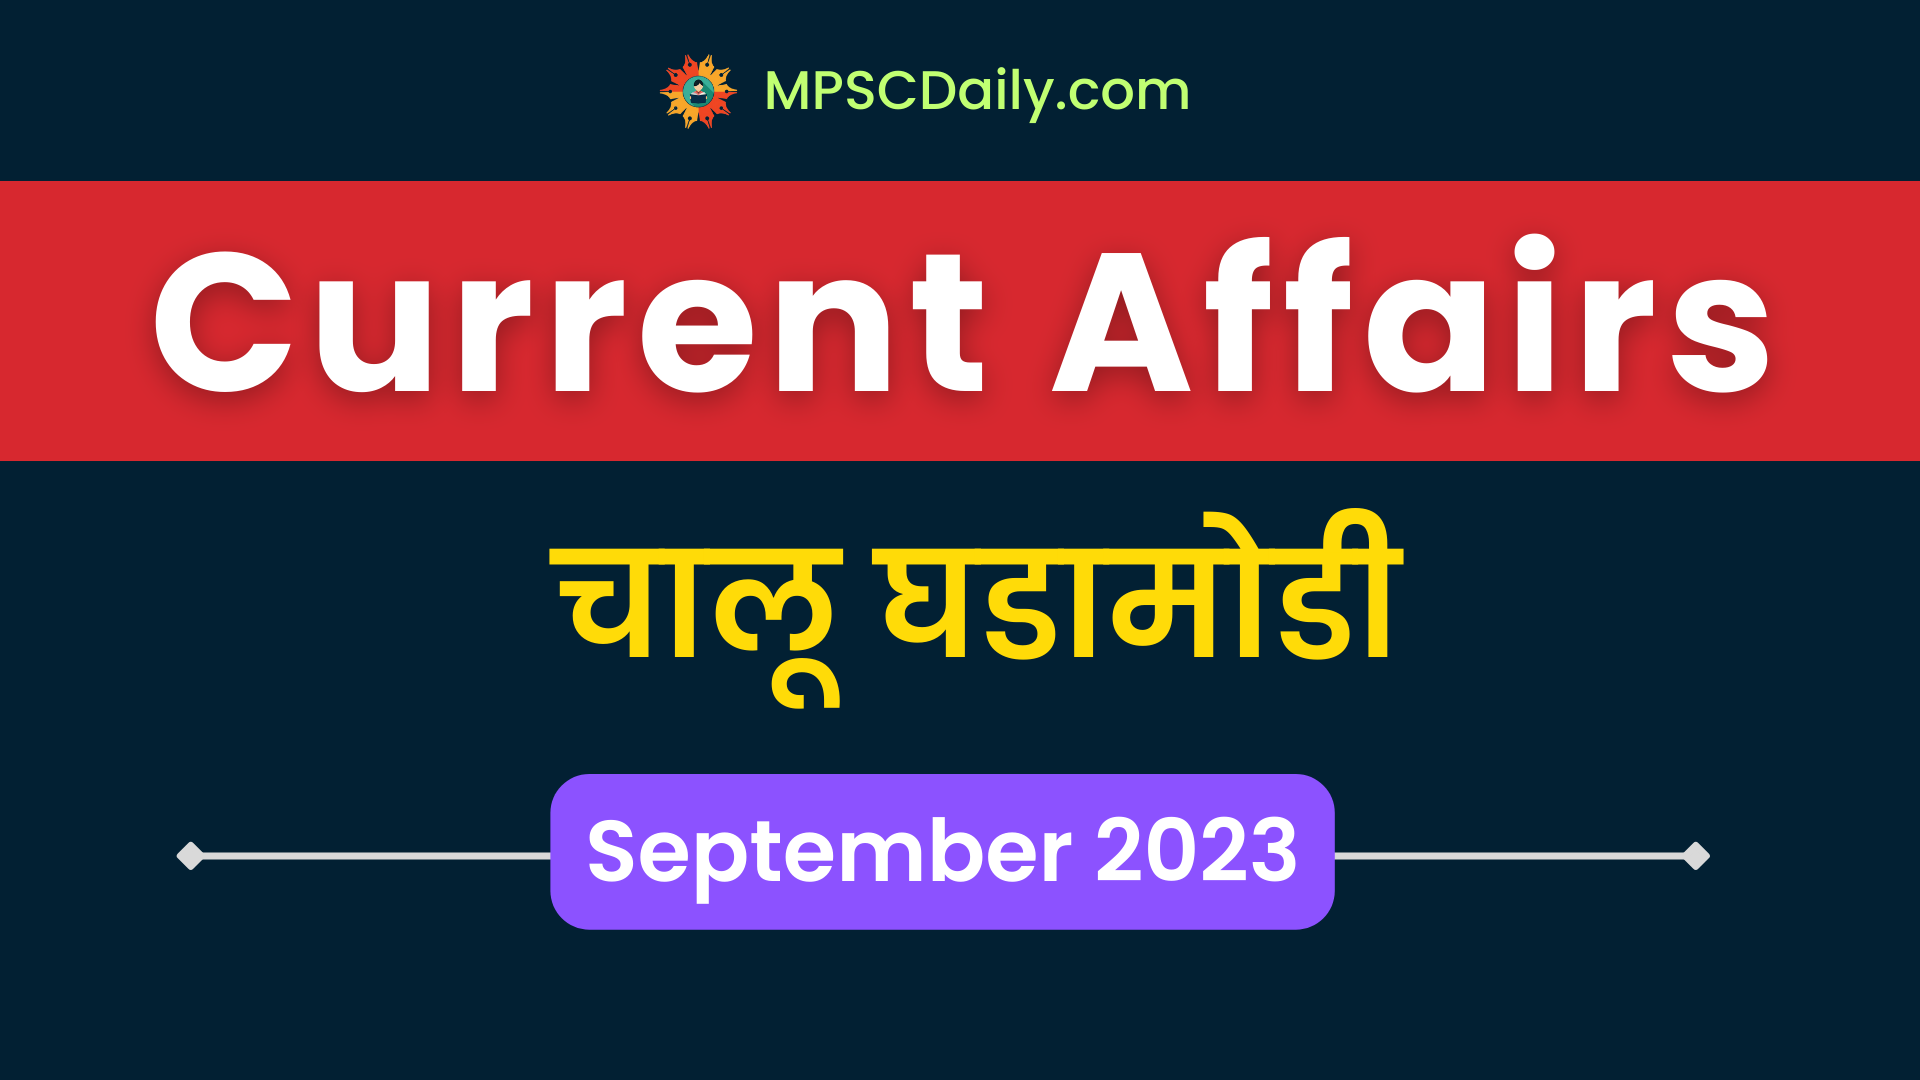 Current Affairs September 2023 in marathi